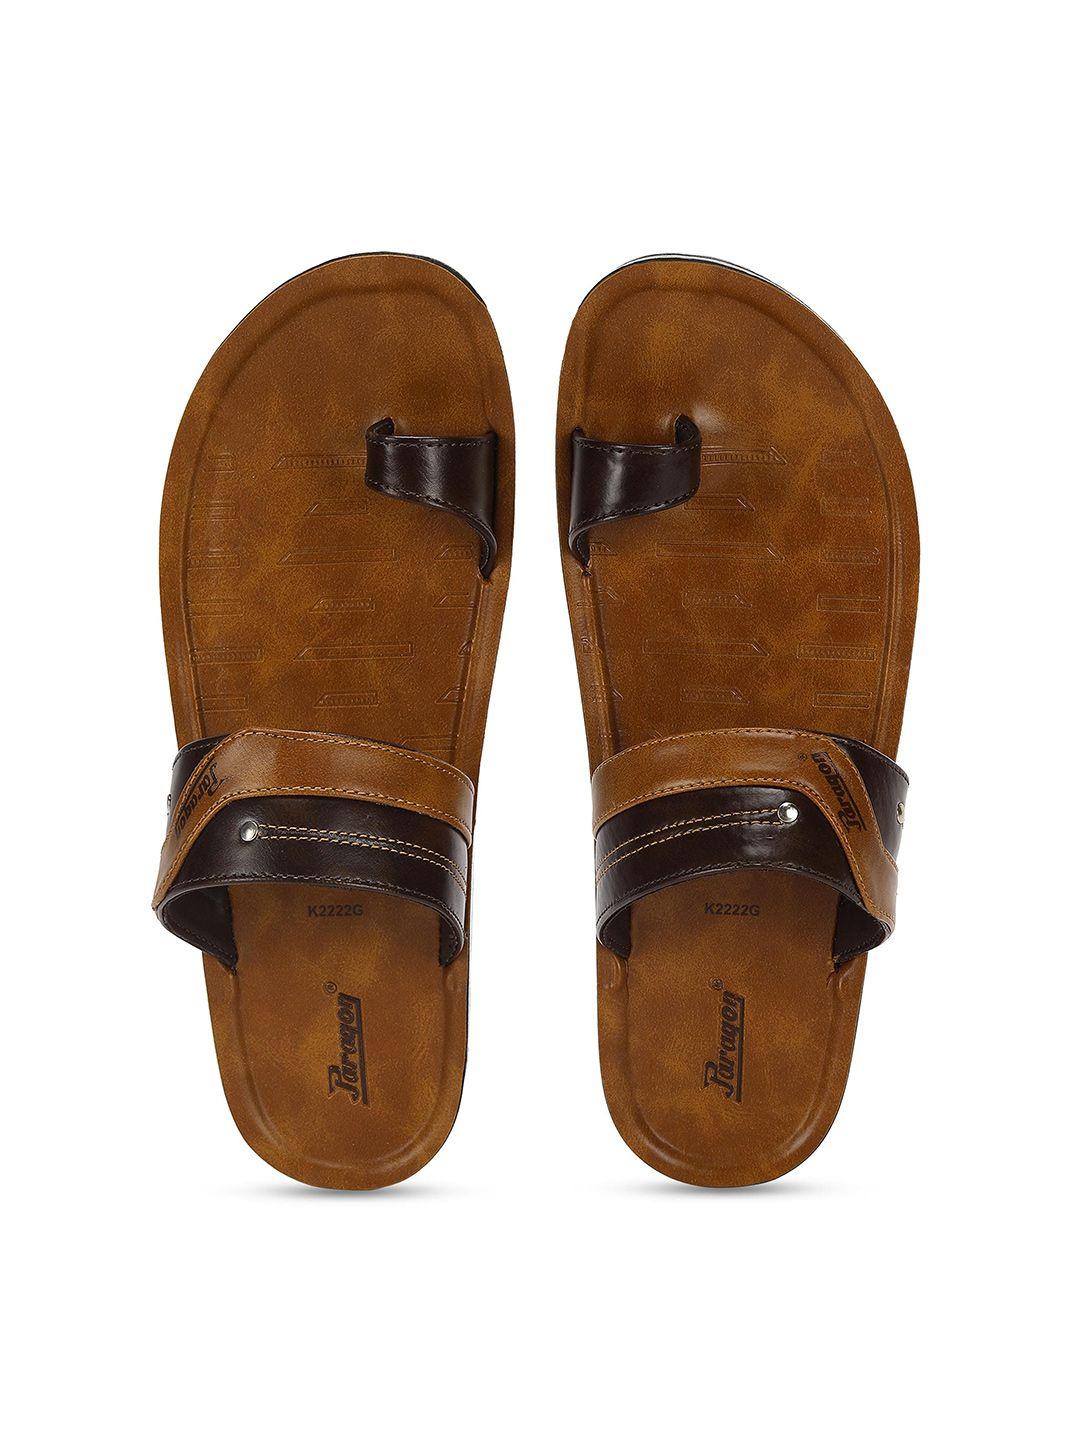 paragon-men-slip-on-comfort-sandals